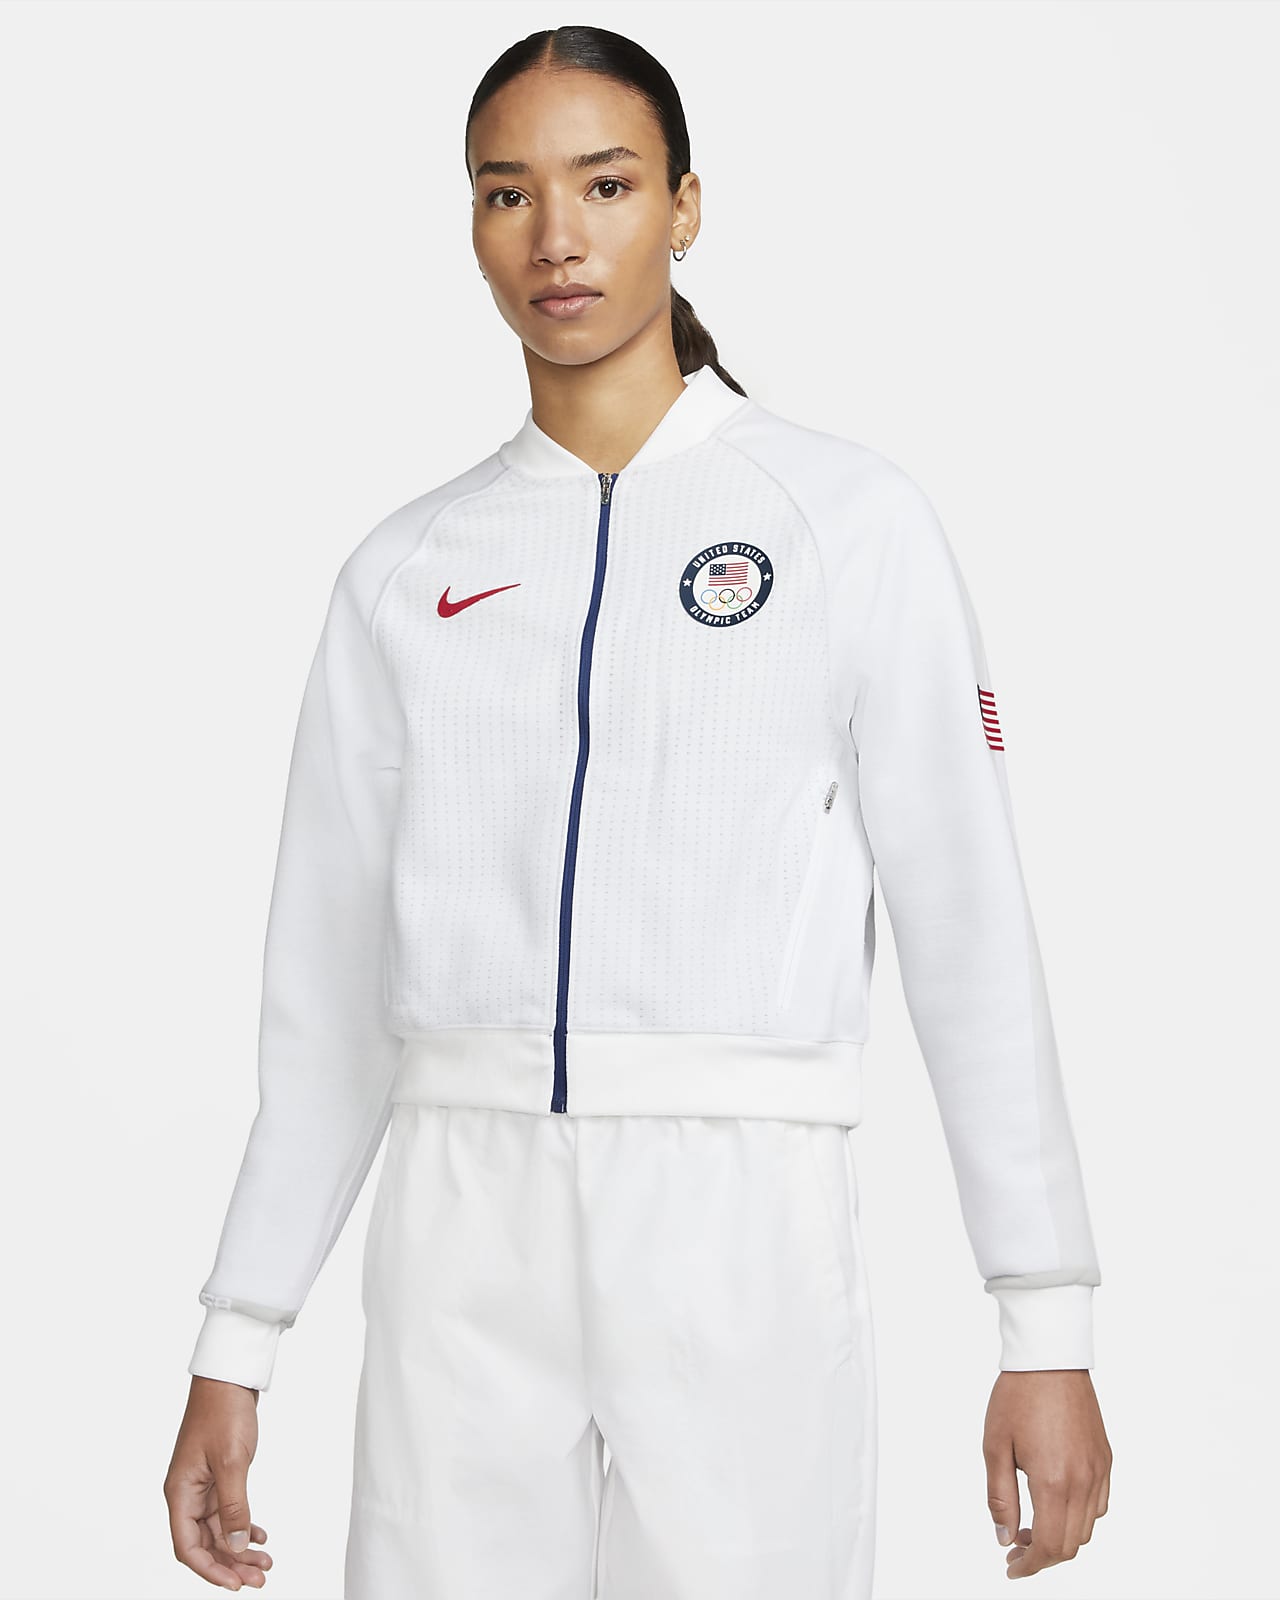 Økologi Slægtsforskning Kilde Nike Team USA Women's Jacket. Nike.com